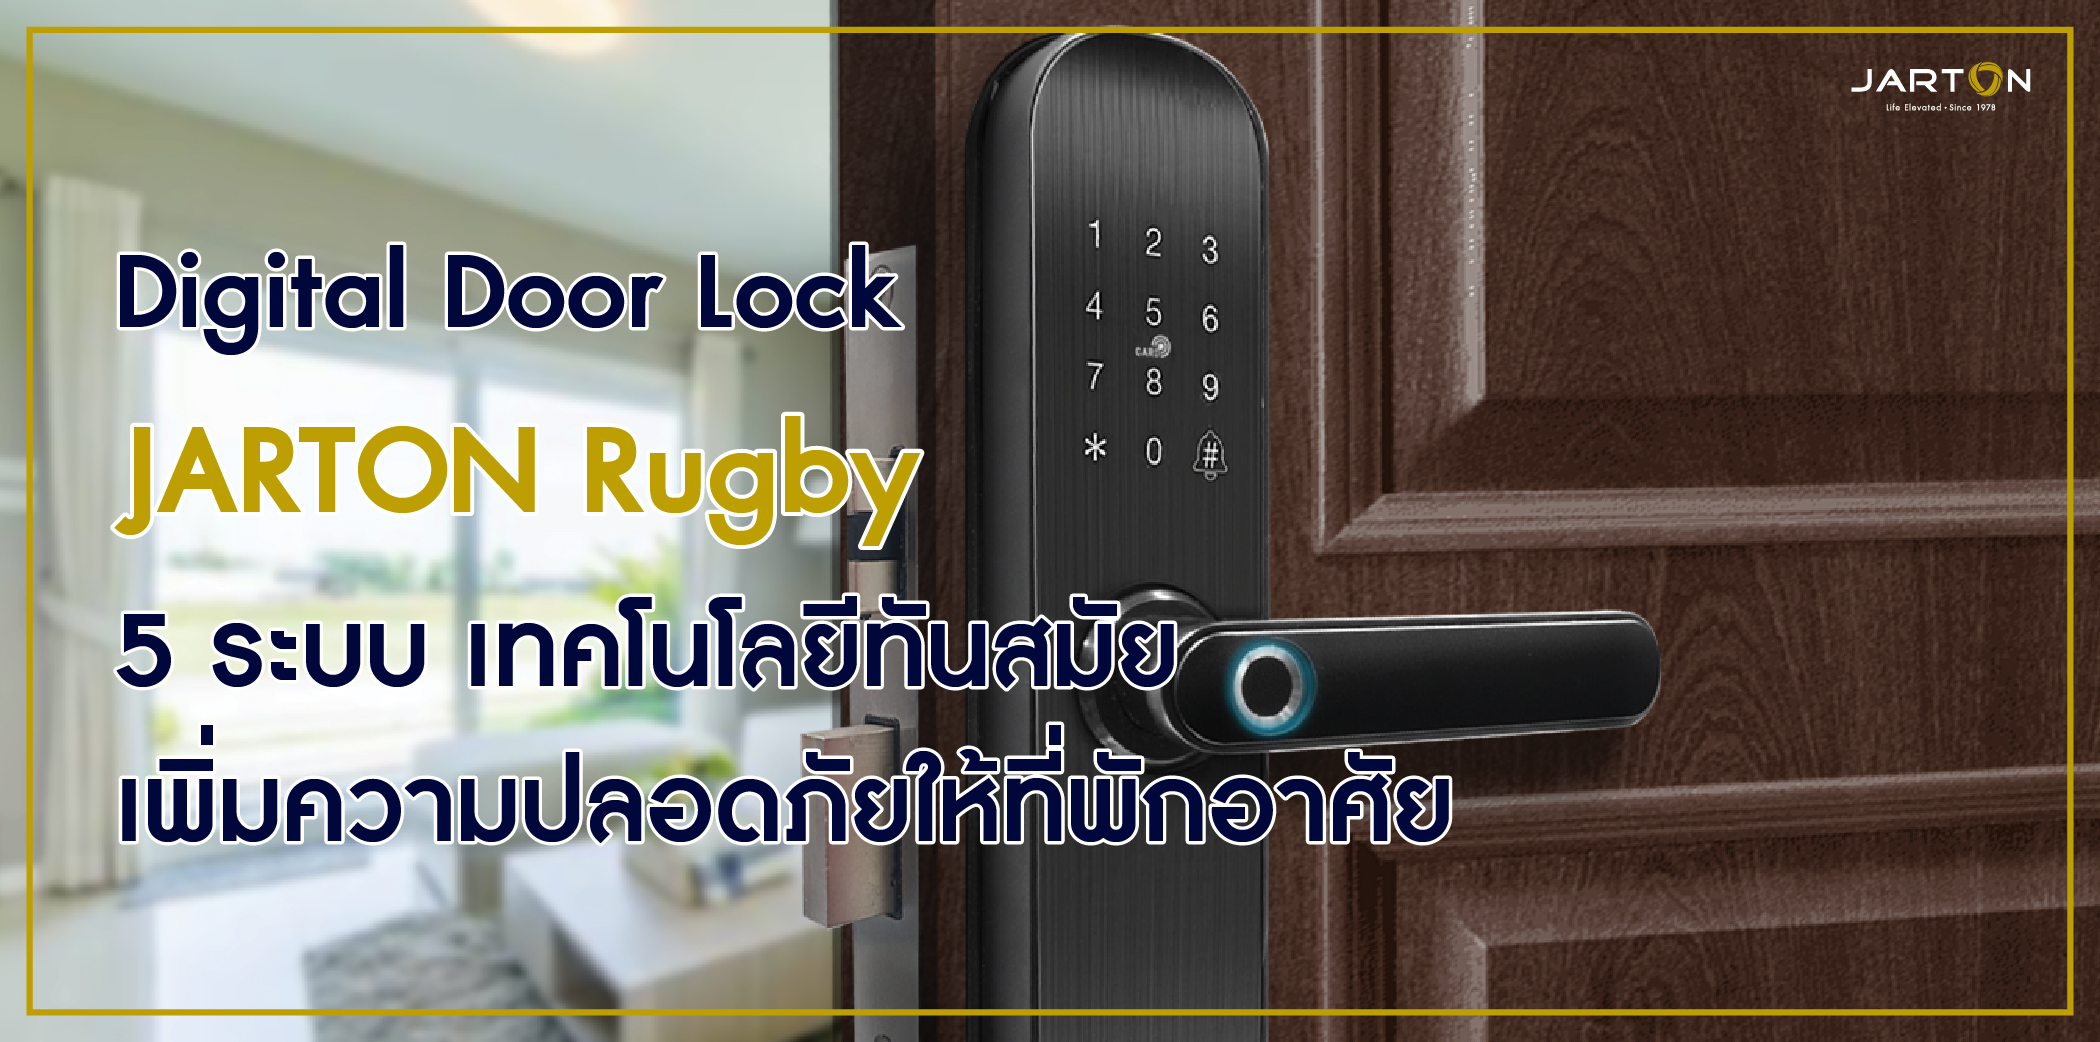 Digital Door Lock JARTON Rugby 5 ระบบ เทคโนโลยีทันสมัย เพิ่มความปลอดภัยให้ที่พักอาศัย